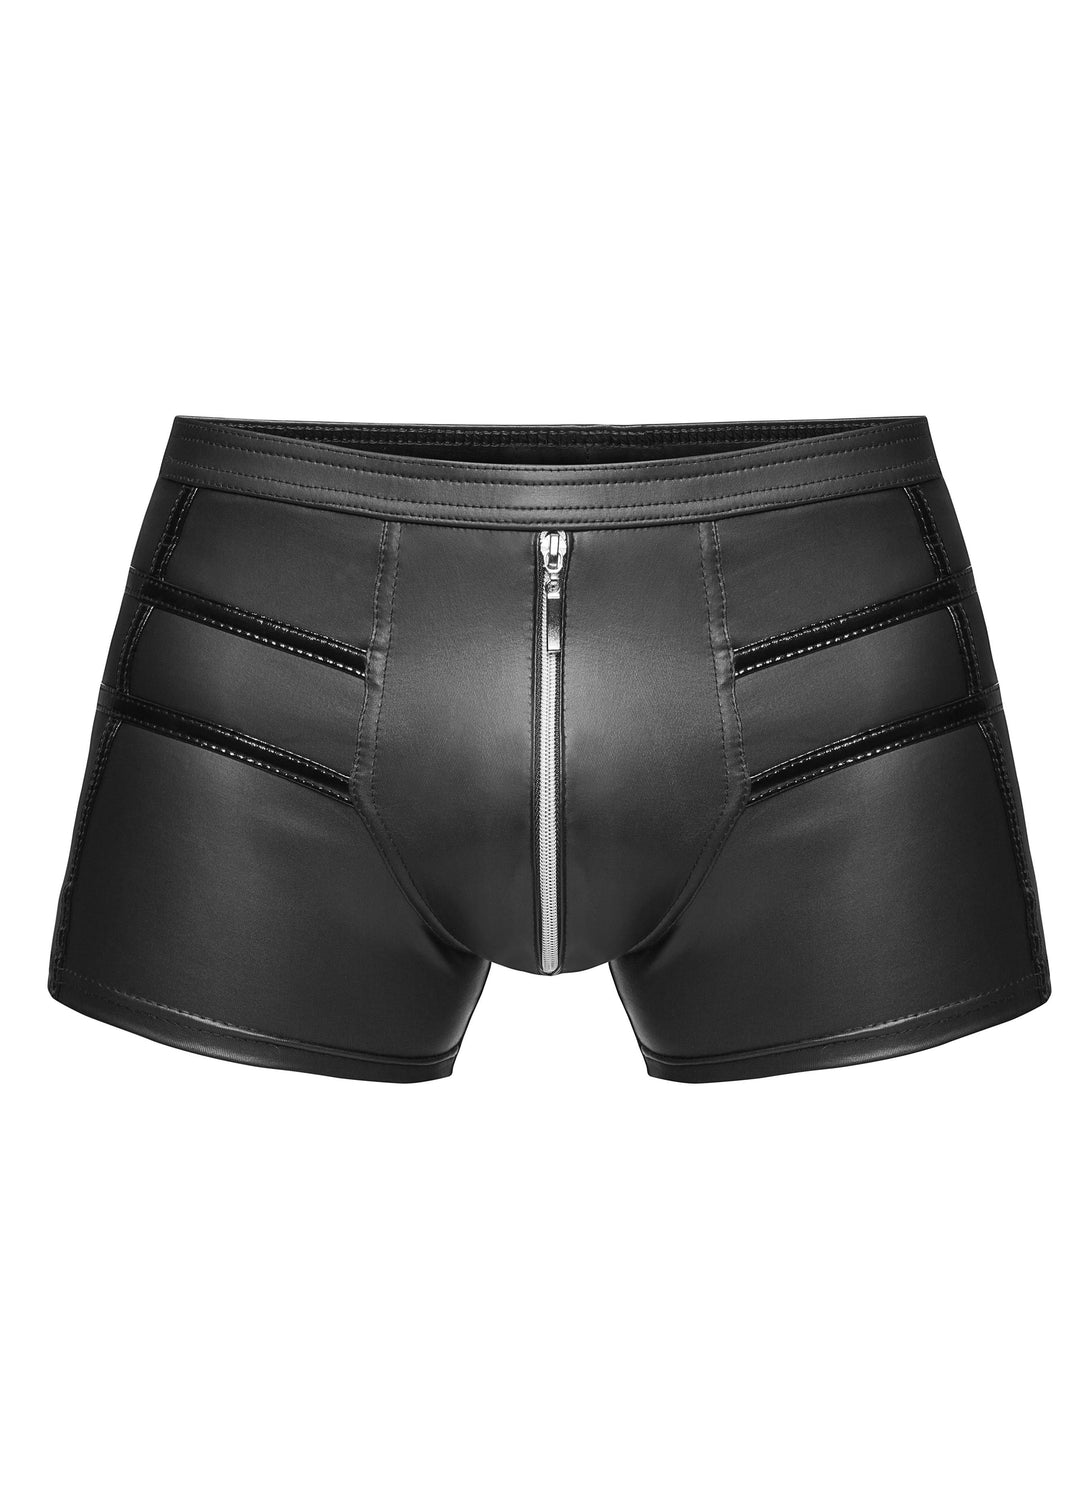 Men Shorts with PVC panel close up